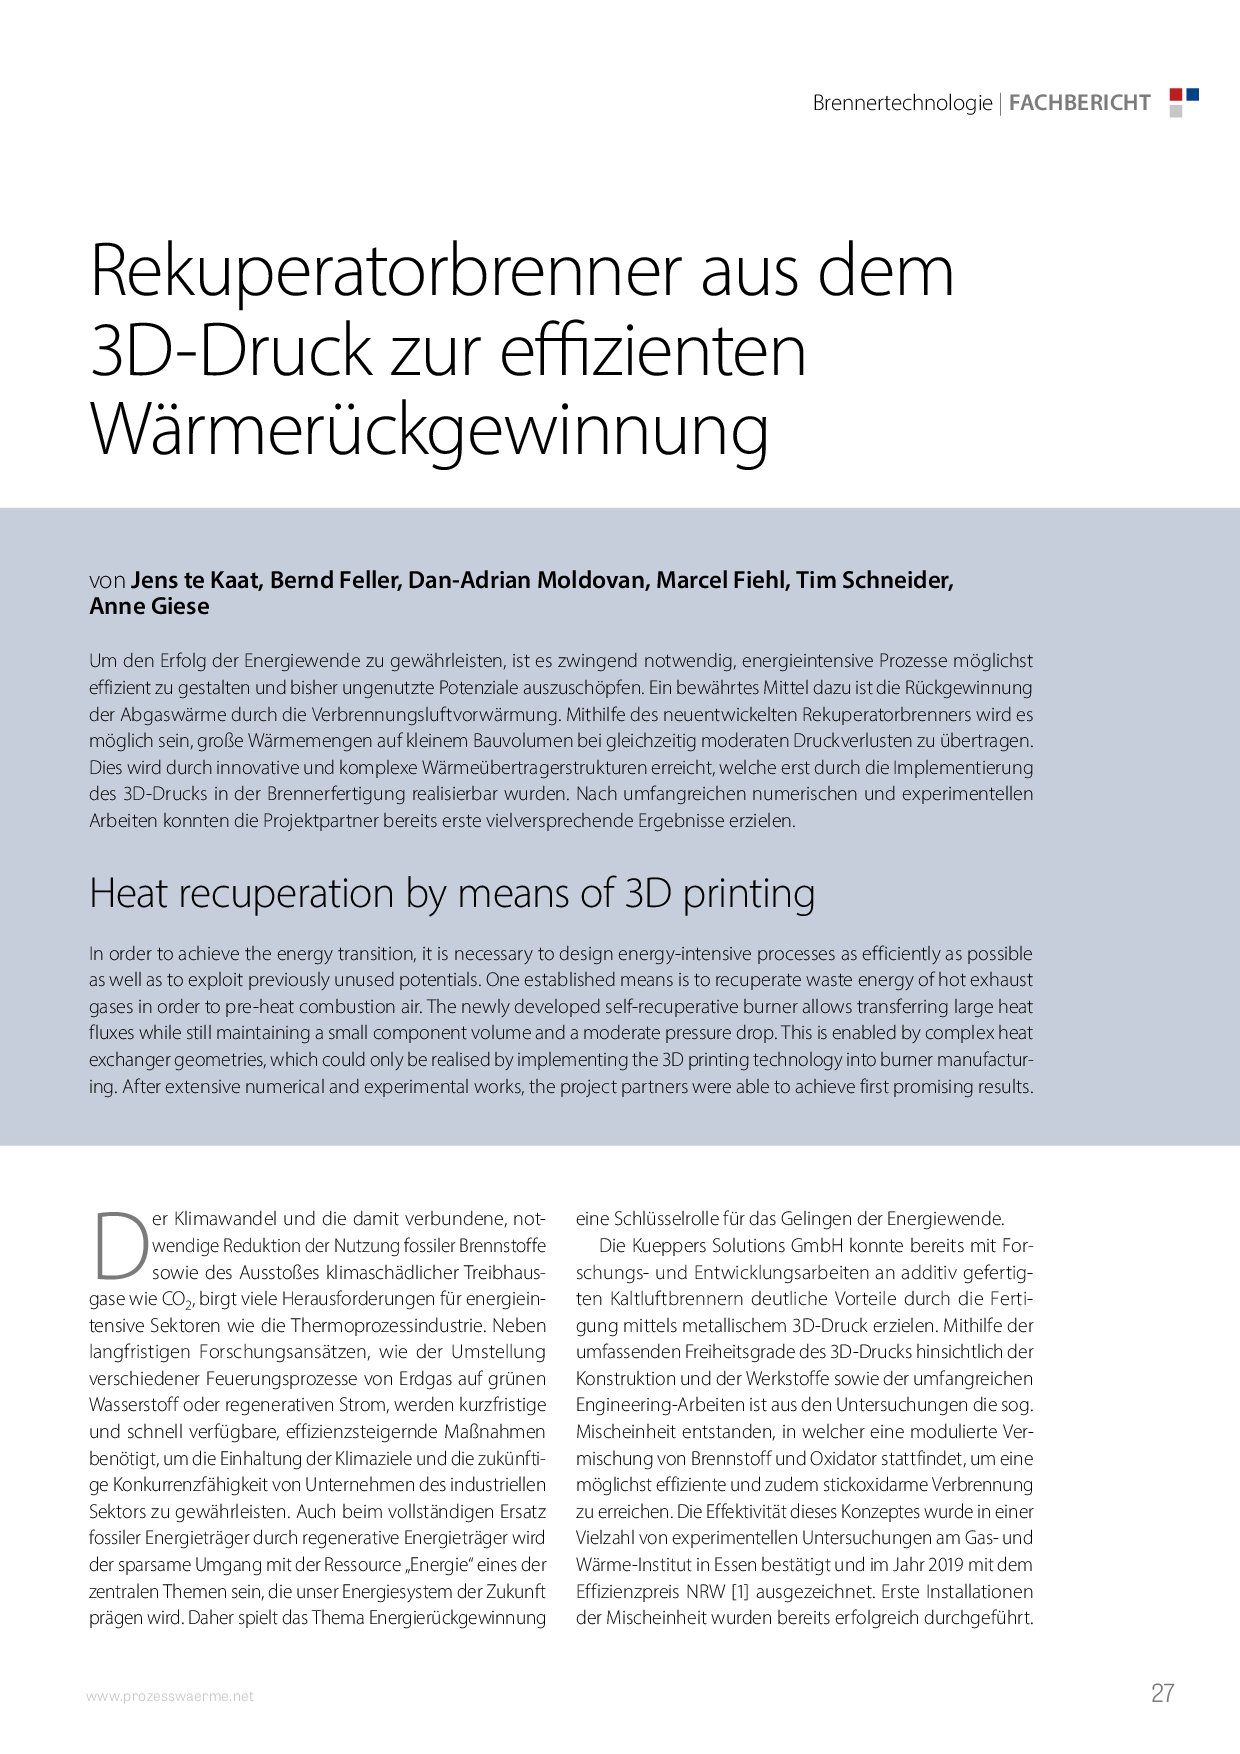 Rekuperatorbrenner aus dem 3D-Druck zur effizienten Wärmerückgewinnung